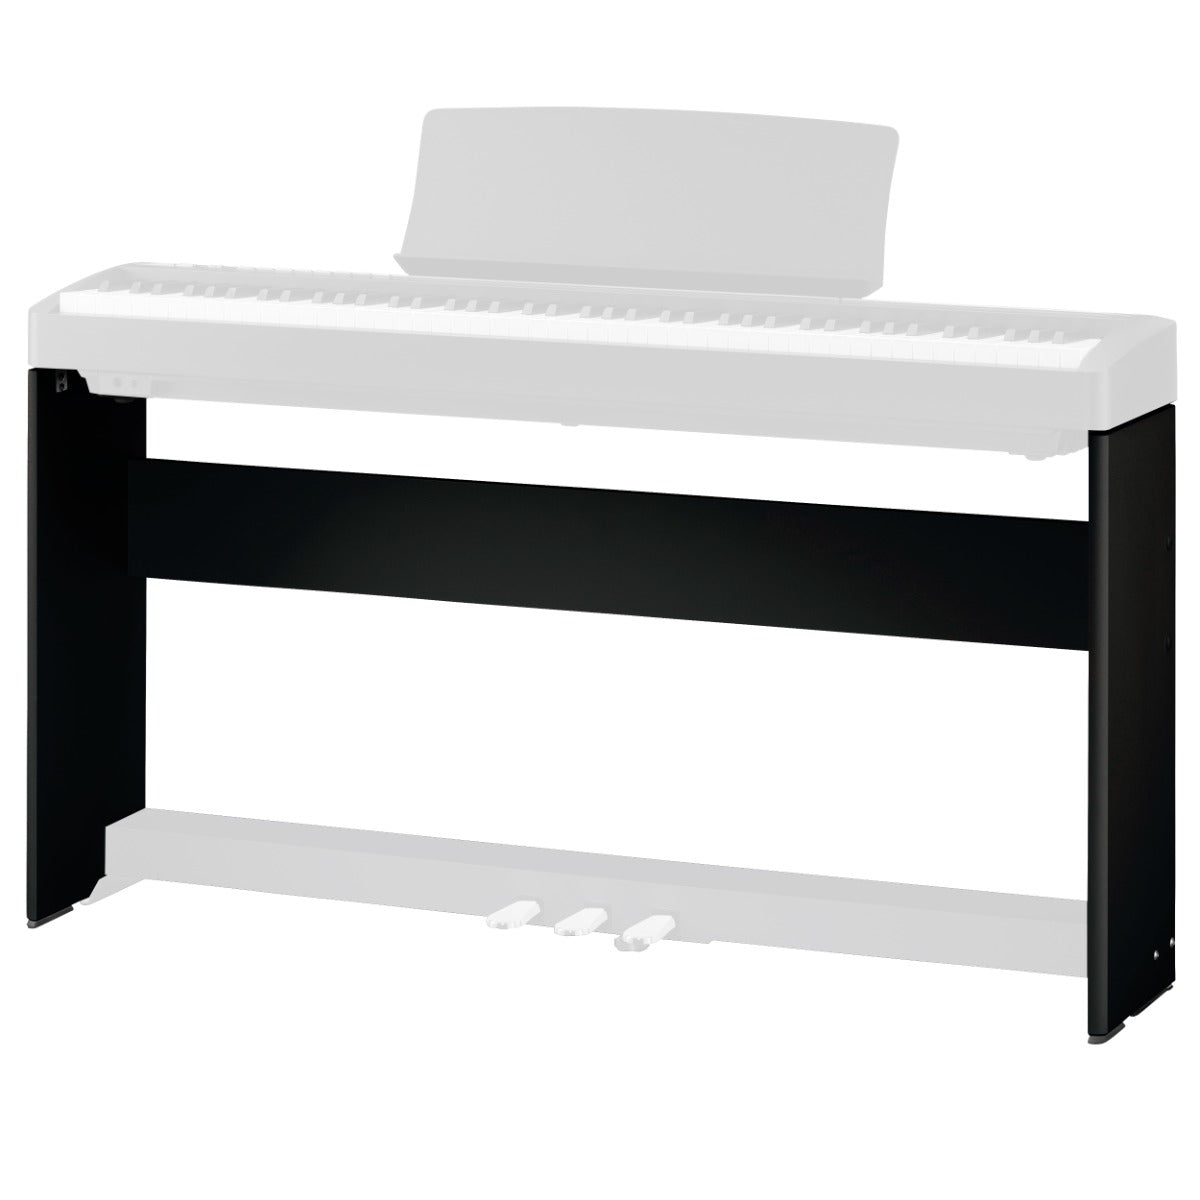 Kawai HML-2 Furniture-Style Stand - Black